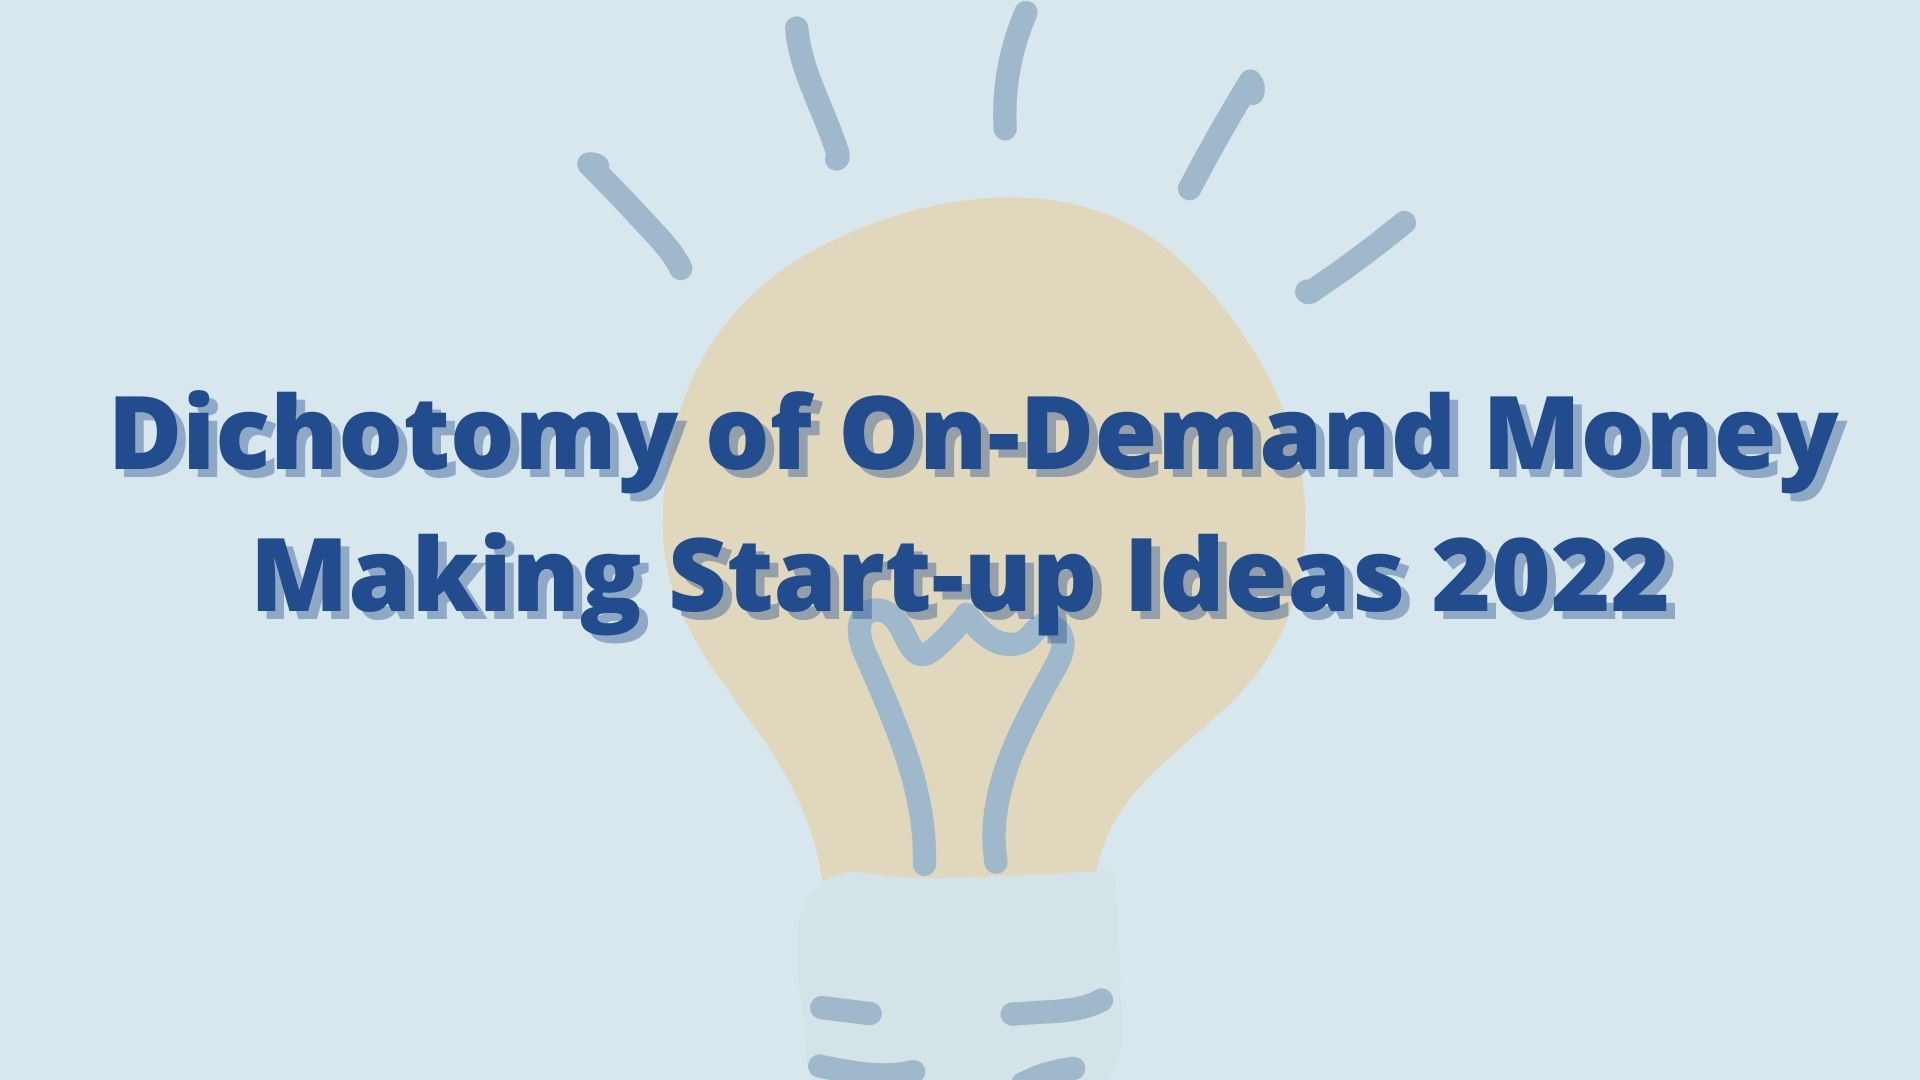 Dichotomy of On-Demand Money Making Start-up Ideas 2022